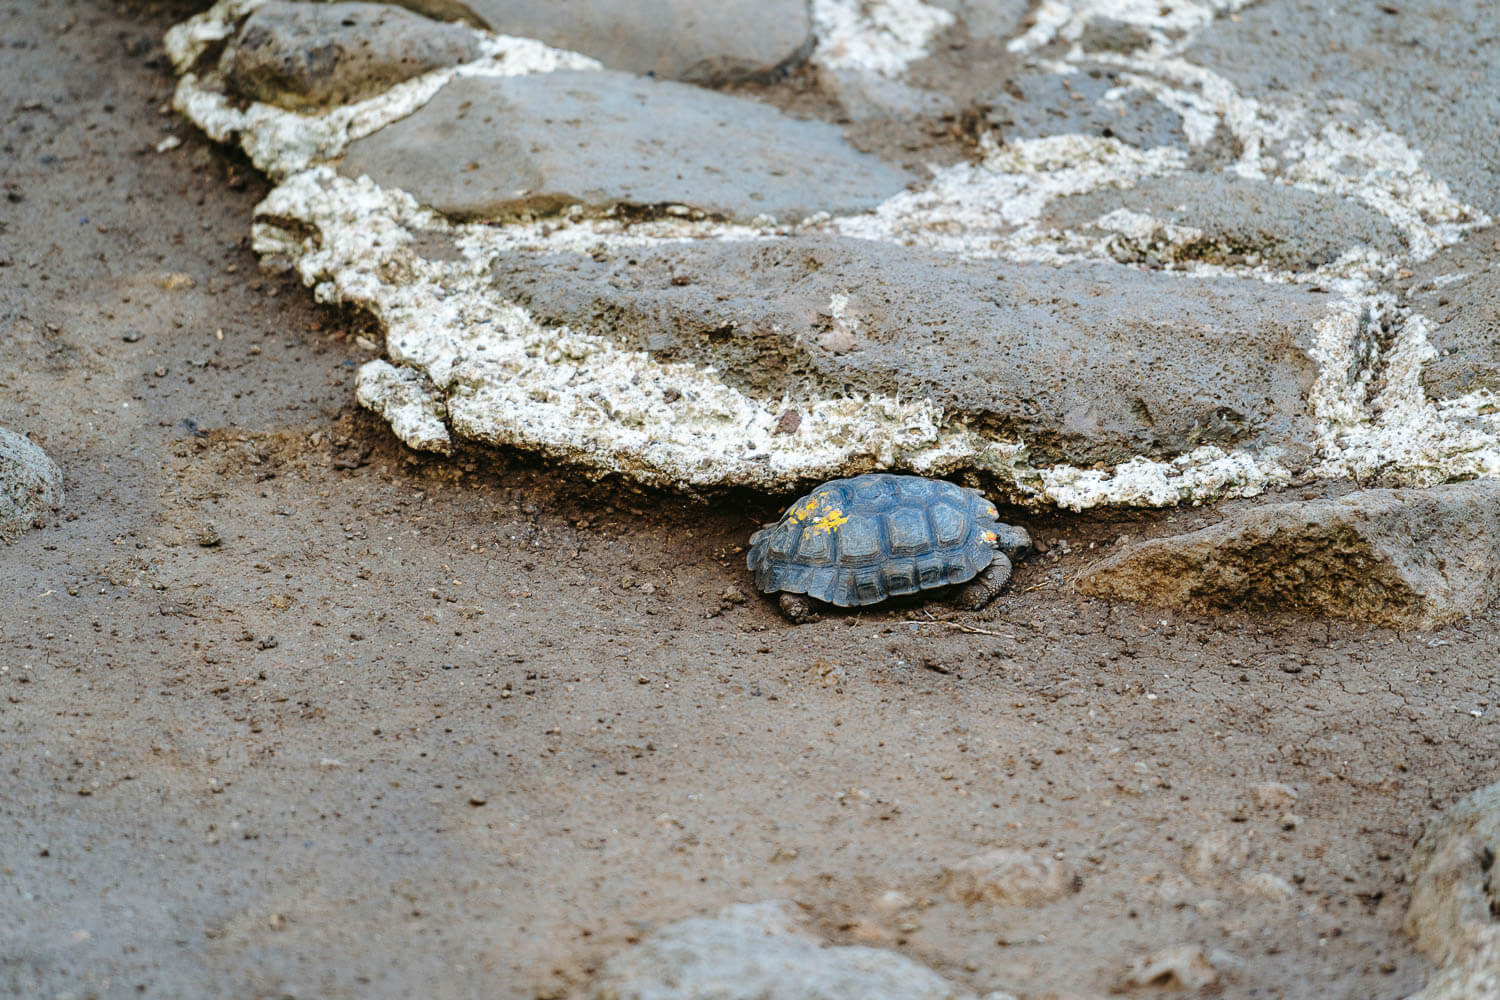 Juvenile tortoise in La Galapaguera